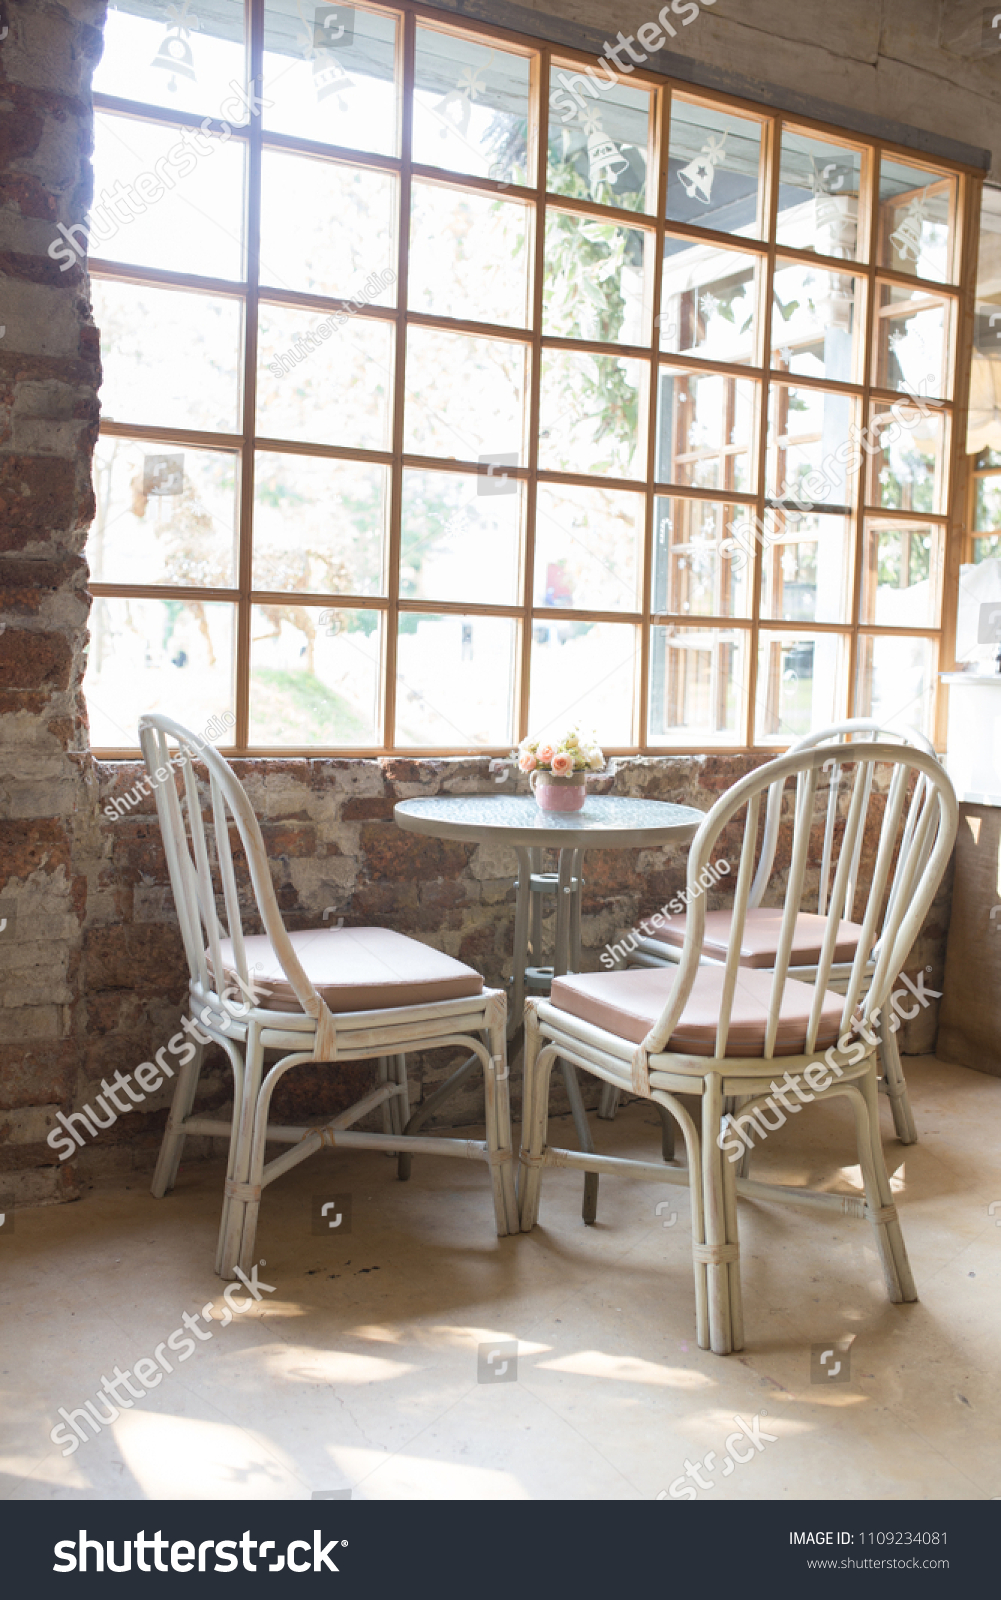 Round Table Chairs Cafe Vintage Style Stockfoto Jetzt Bearbeiten 1109234081